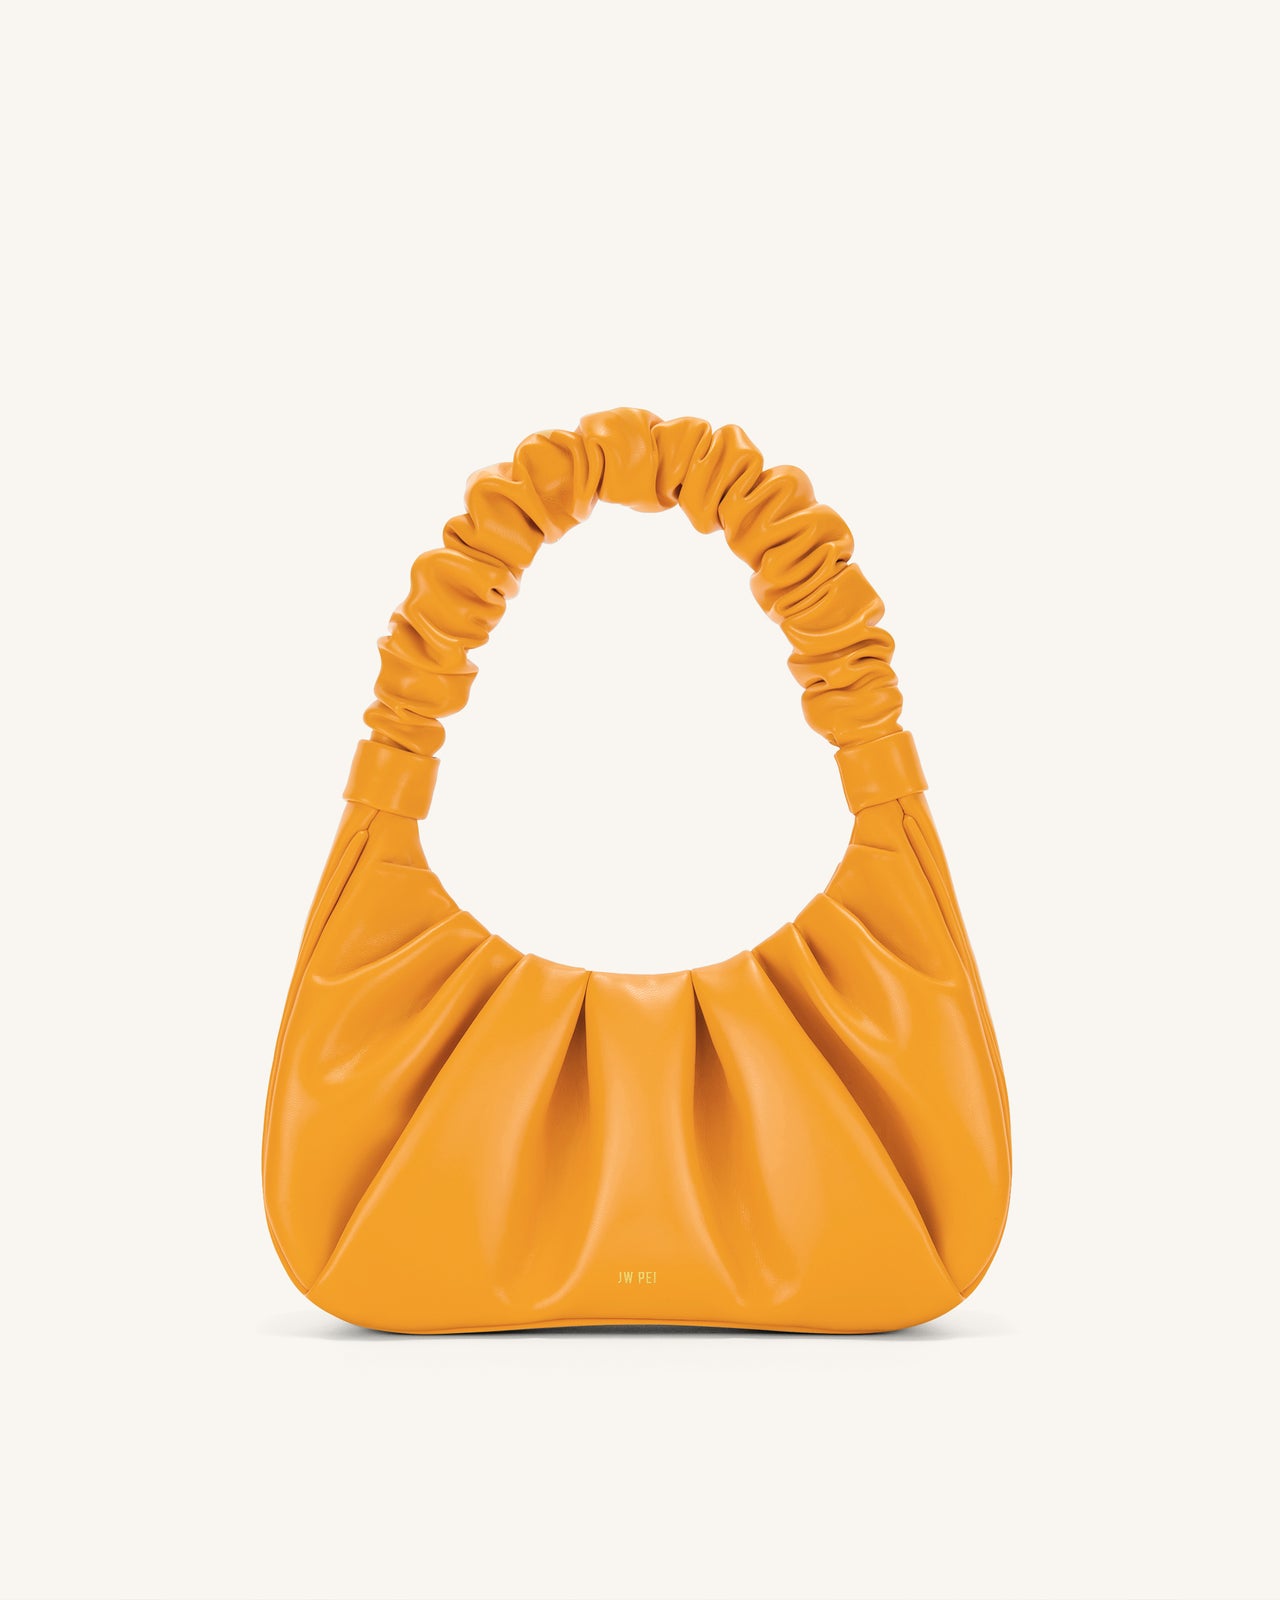 Gabbi Ruched Hobo Handbag - Candied Orange